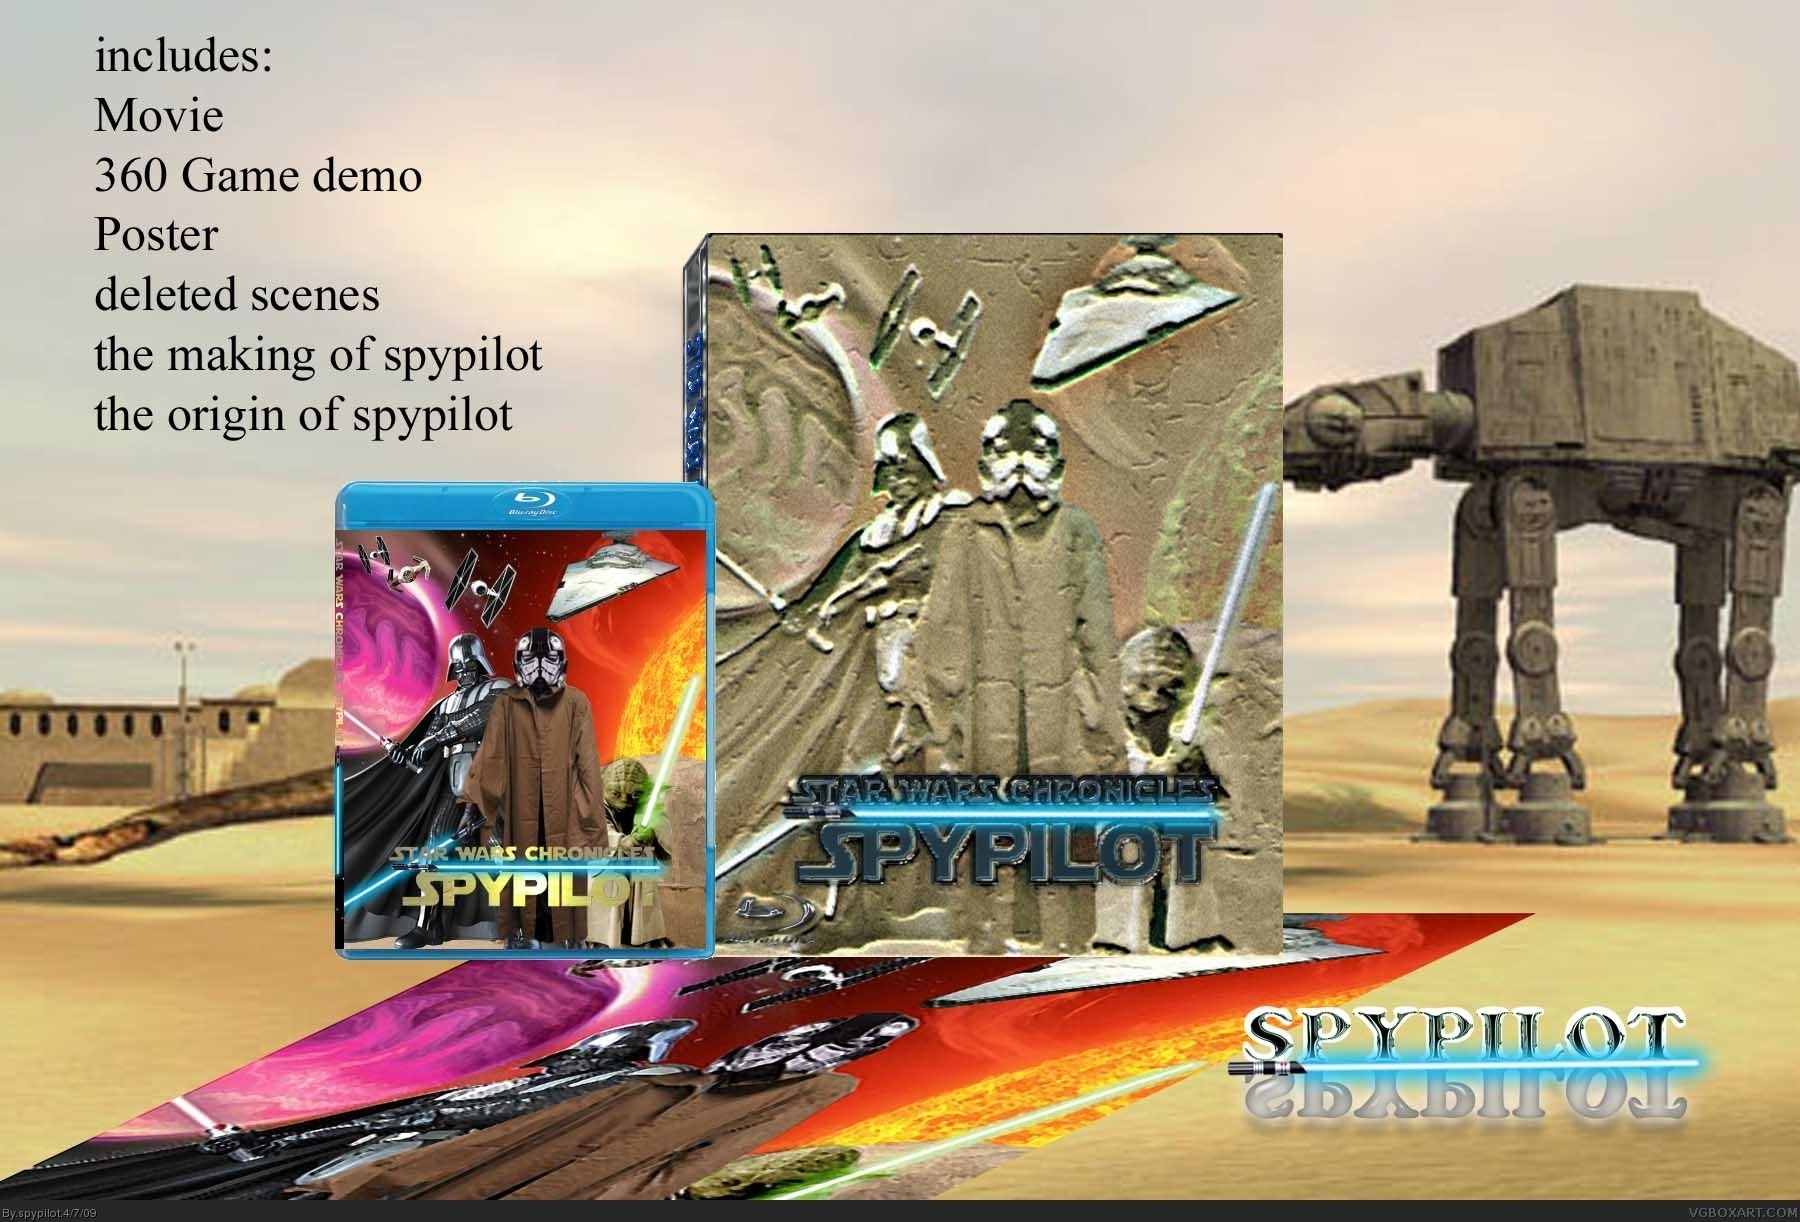 Star Wars Chronicles: Spypilot box cover